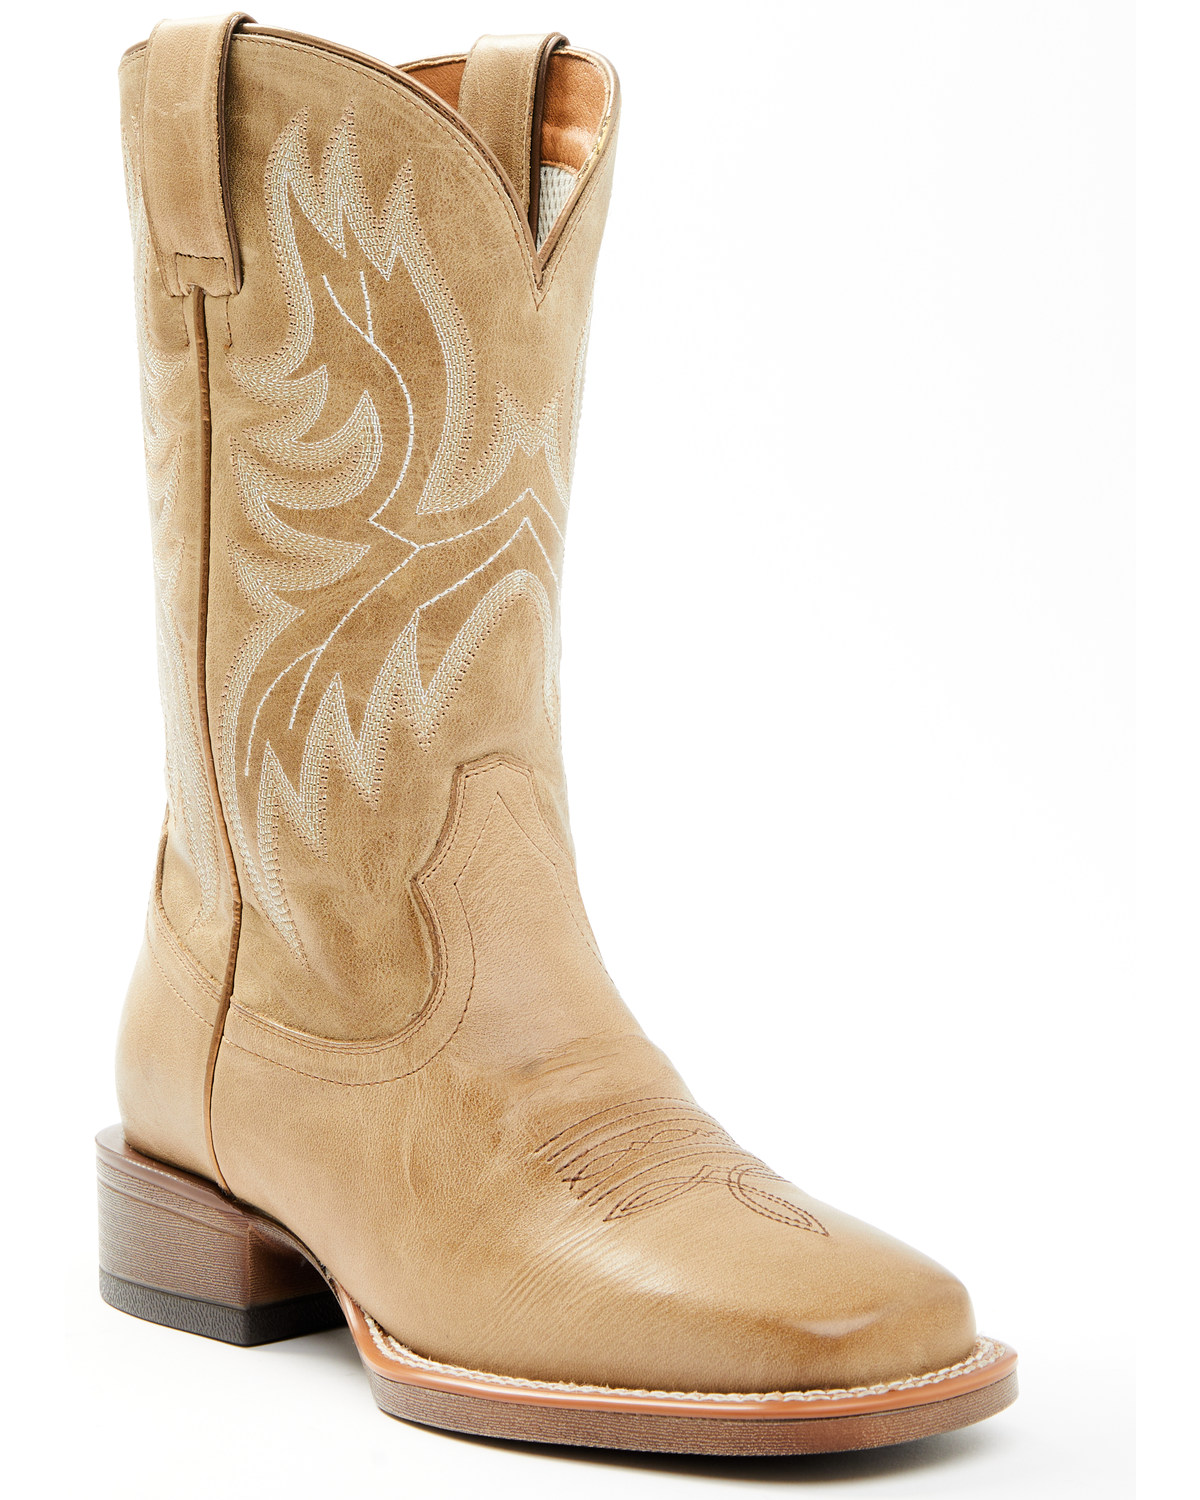 Shyanne Stryde® Women's Western Boots - Broad Square Toe